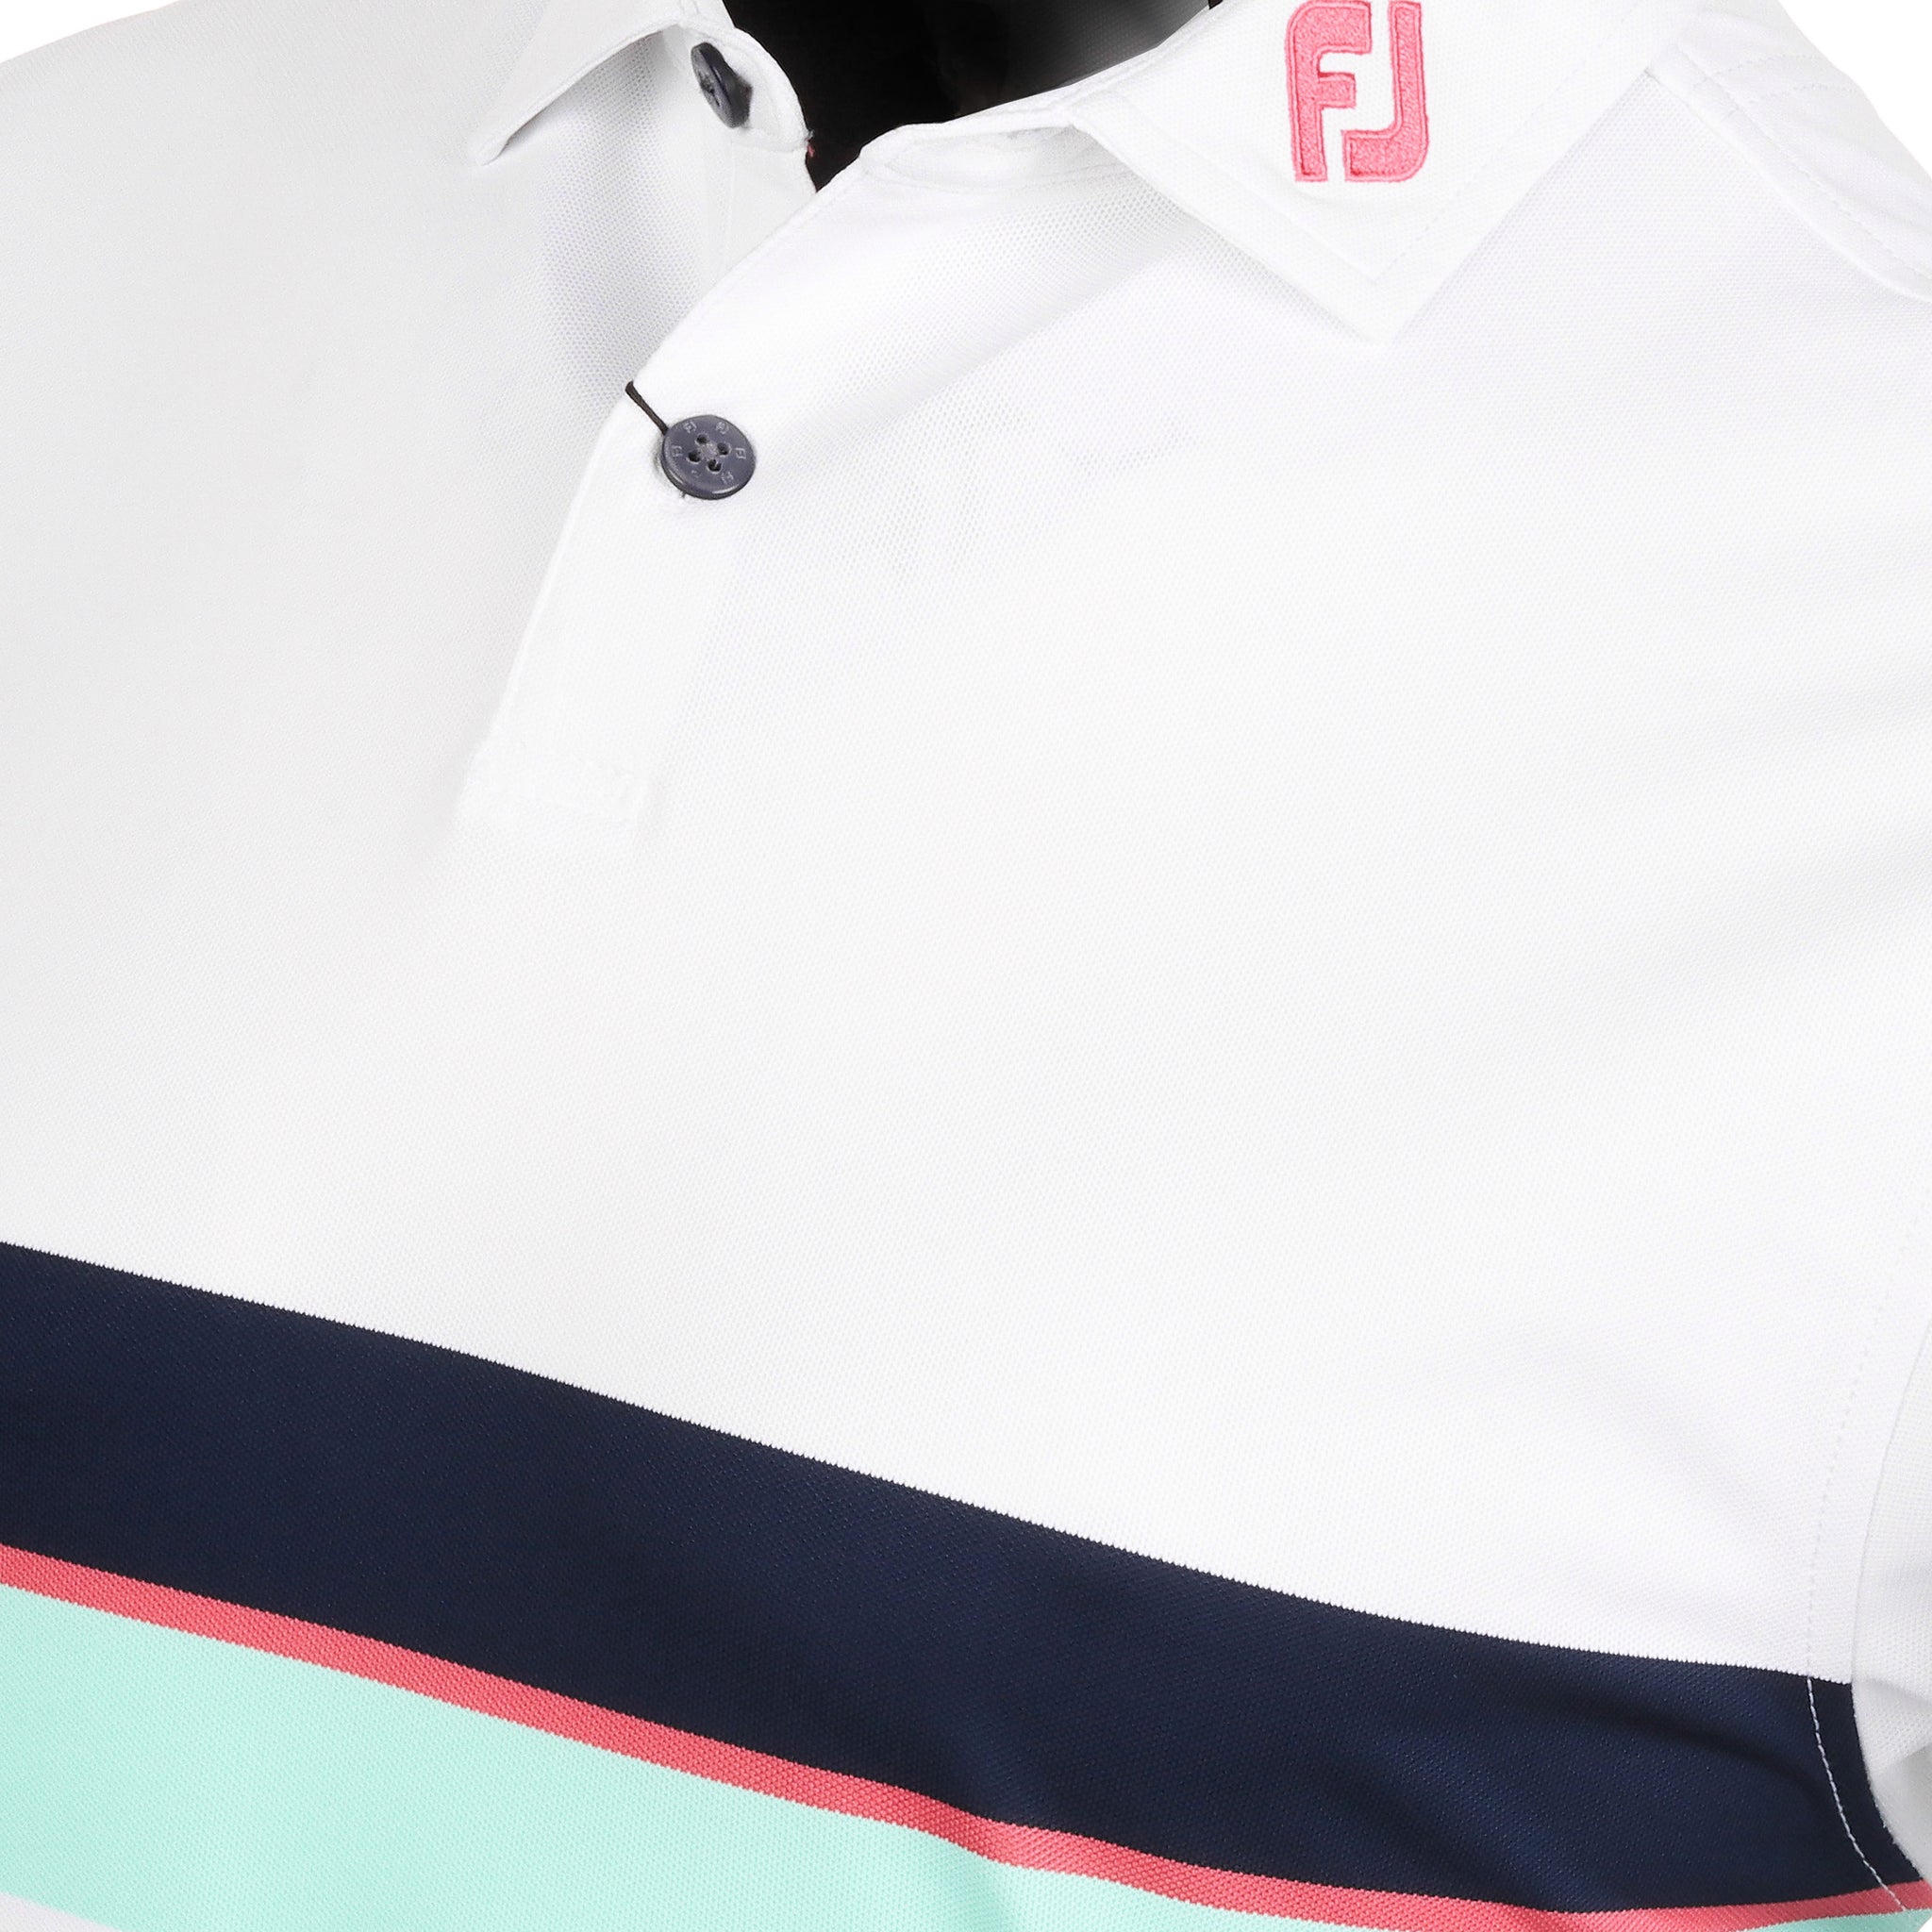 FootJoy Golf Double Chest Band Pique Golf Shirt